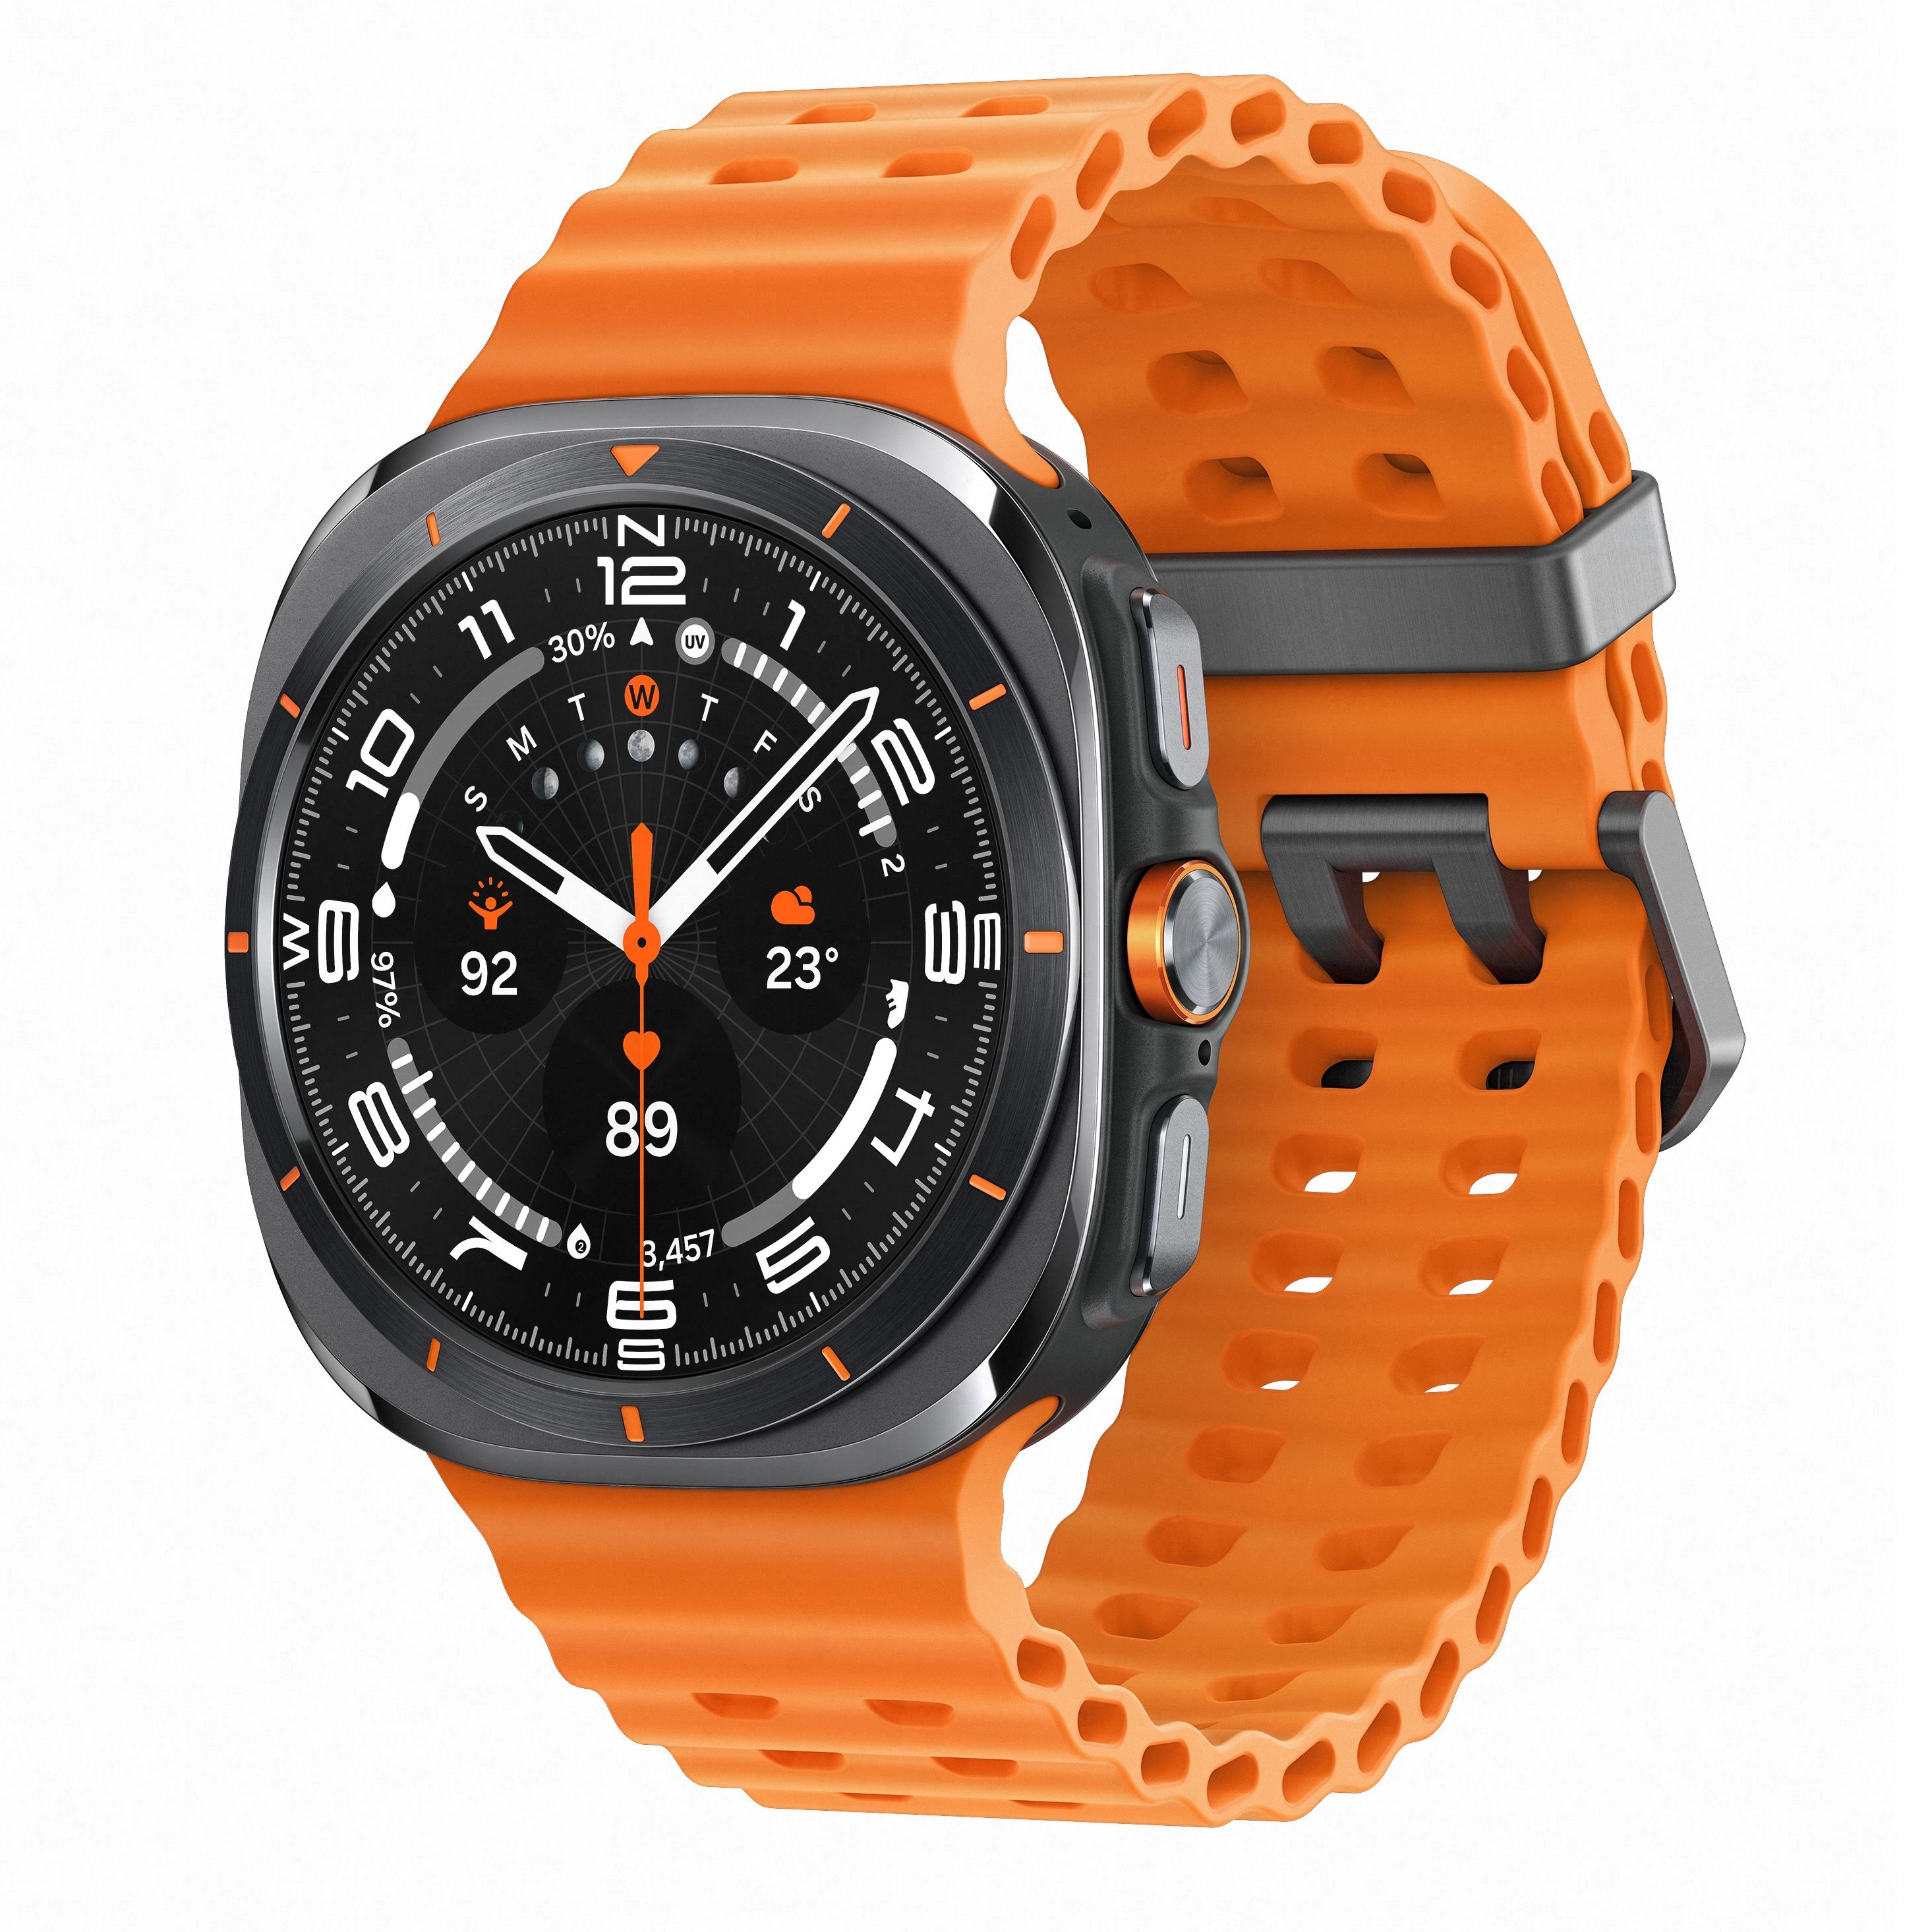 Samsung Galaxy Watch Ultra com pulseira laranja